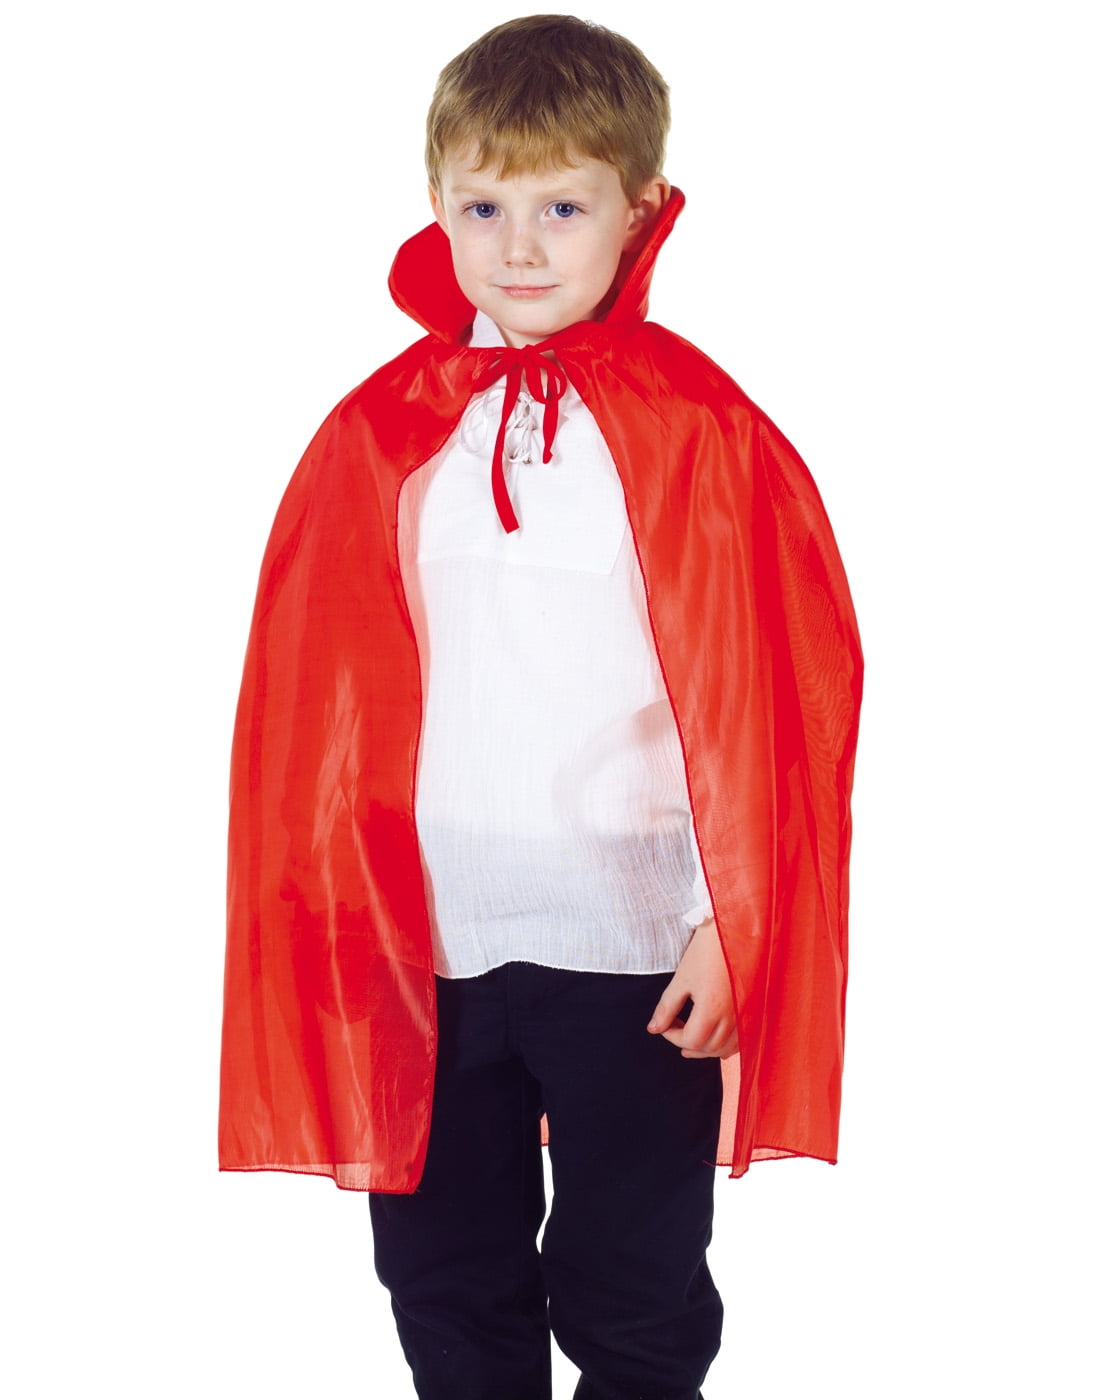 Taffeta Boys Child Red Cape Vampire Halloween Costume Accessory ...